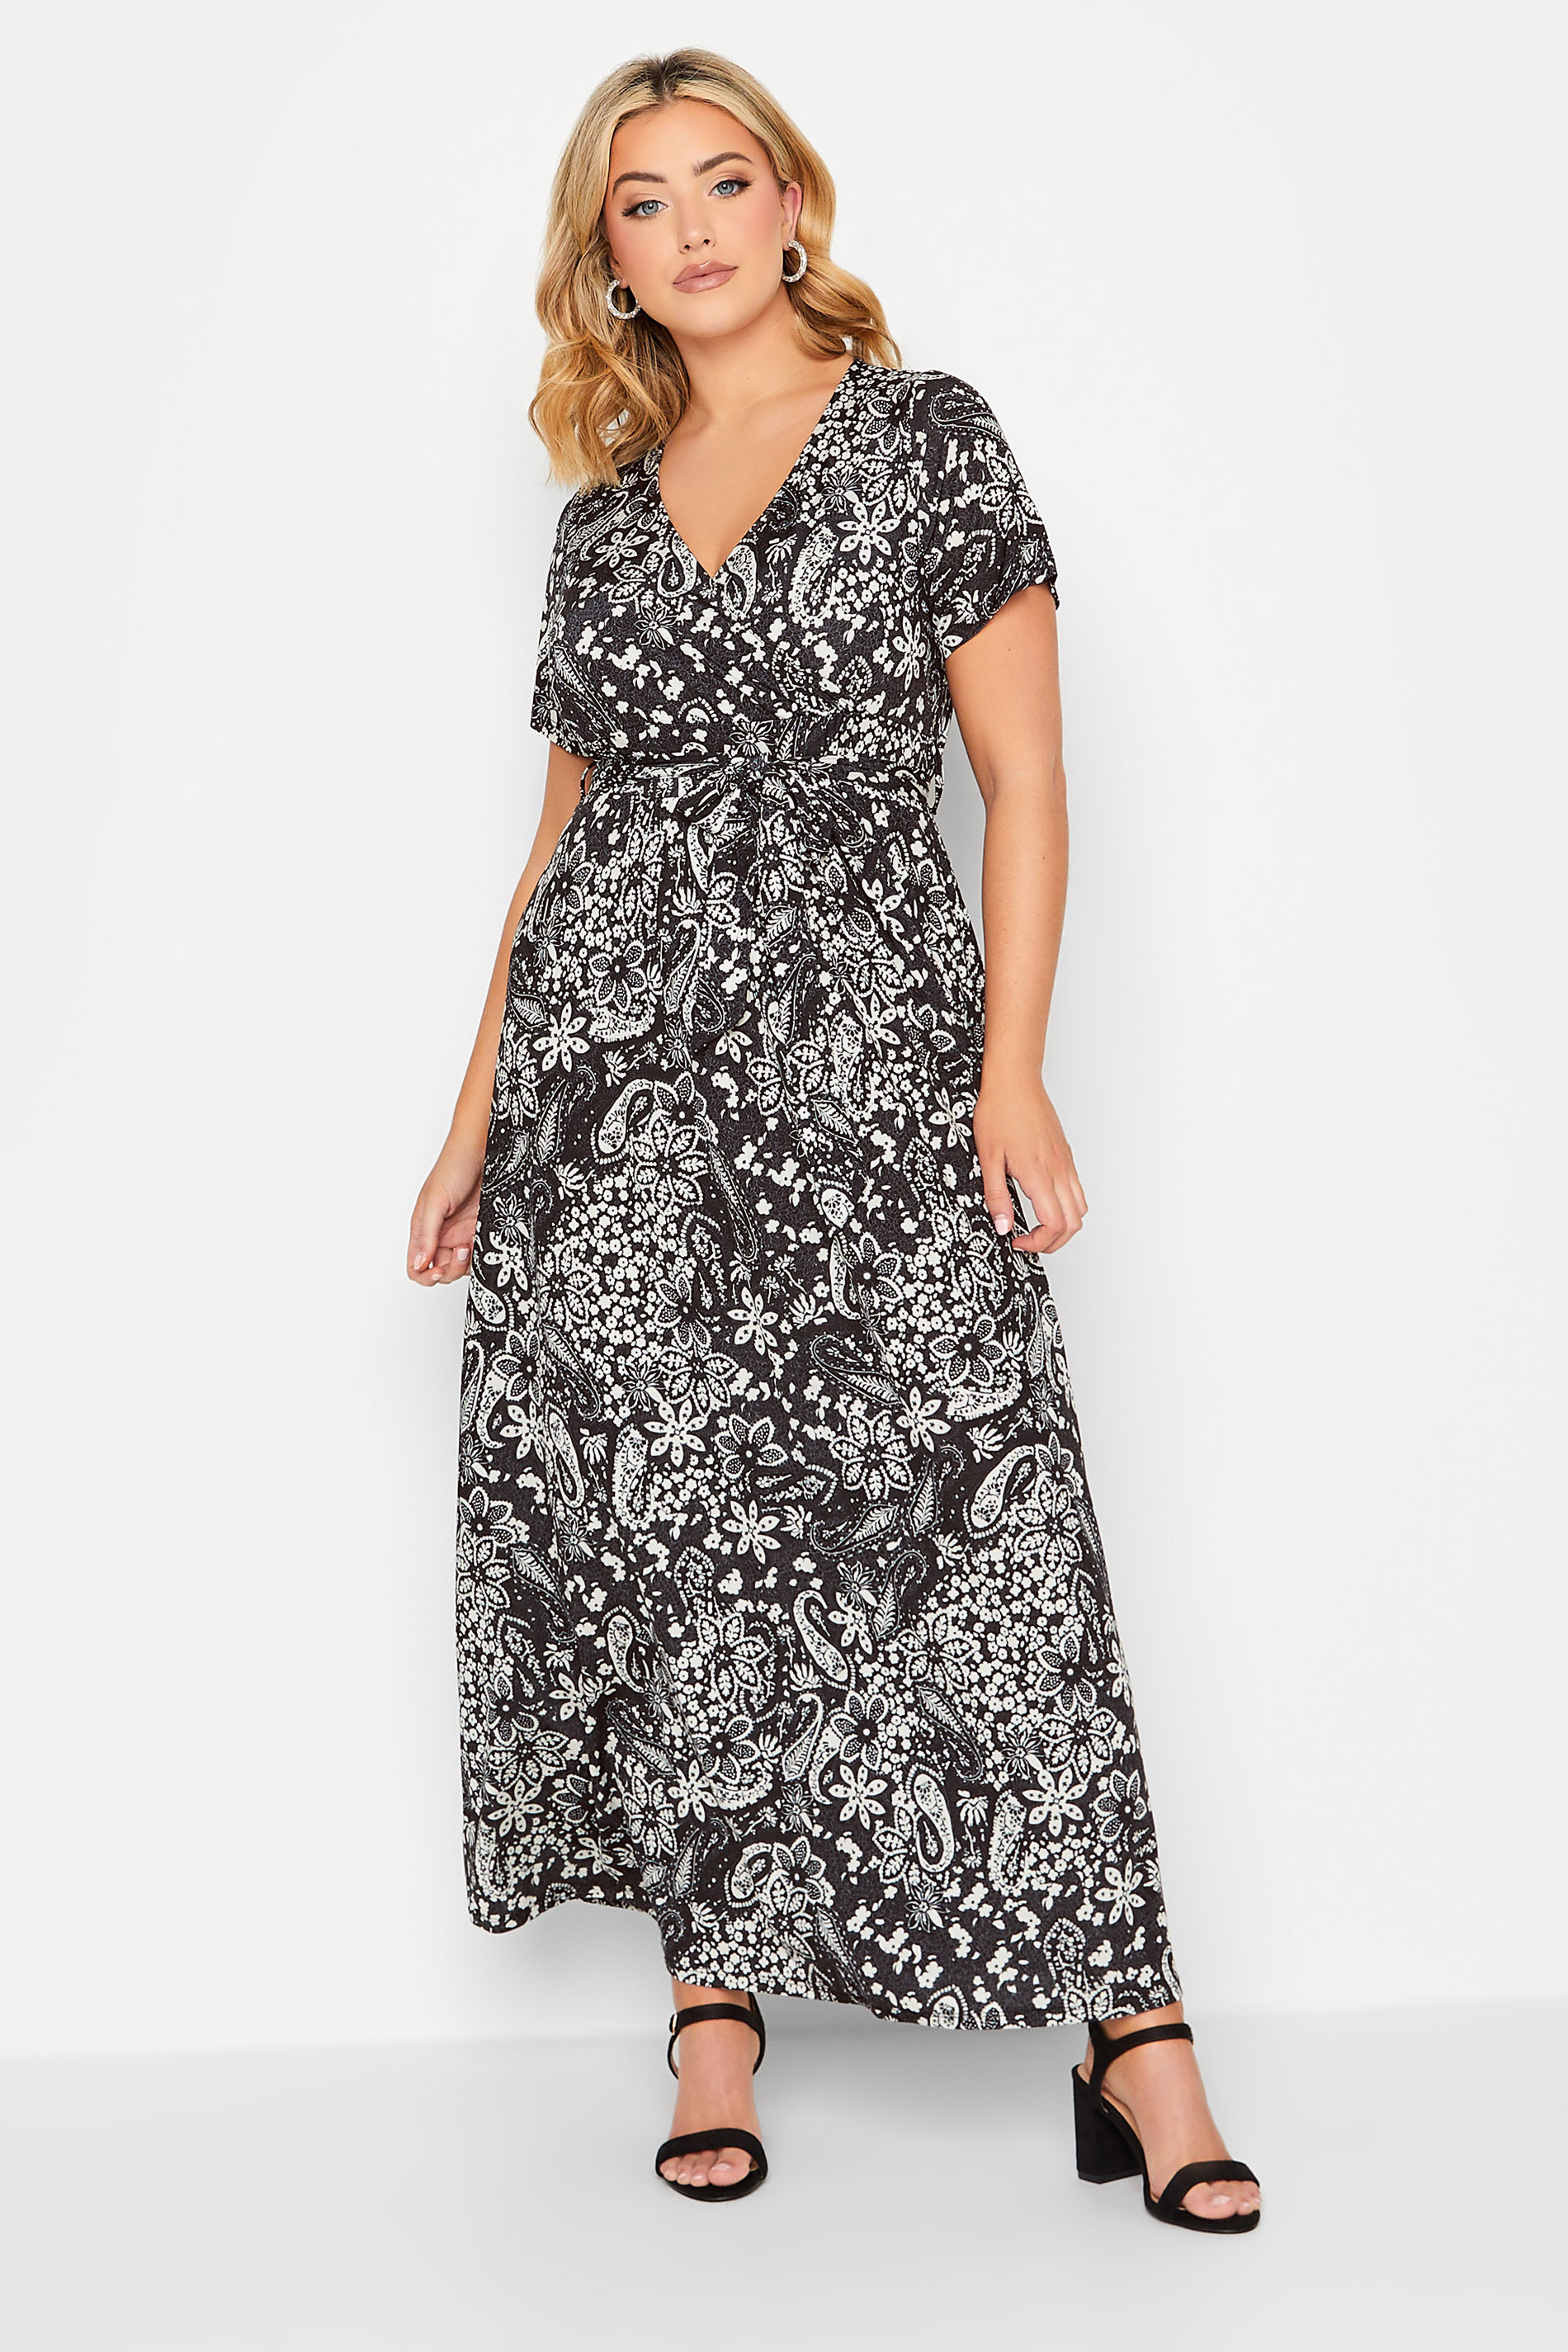 YOURS Plus Size Black Paisley Print Wrap Maxi Dress | Yours Clothing 1